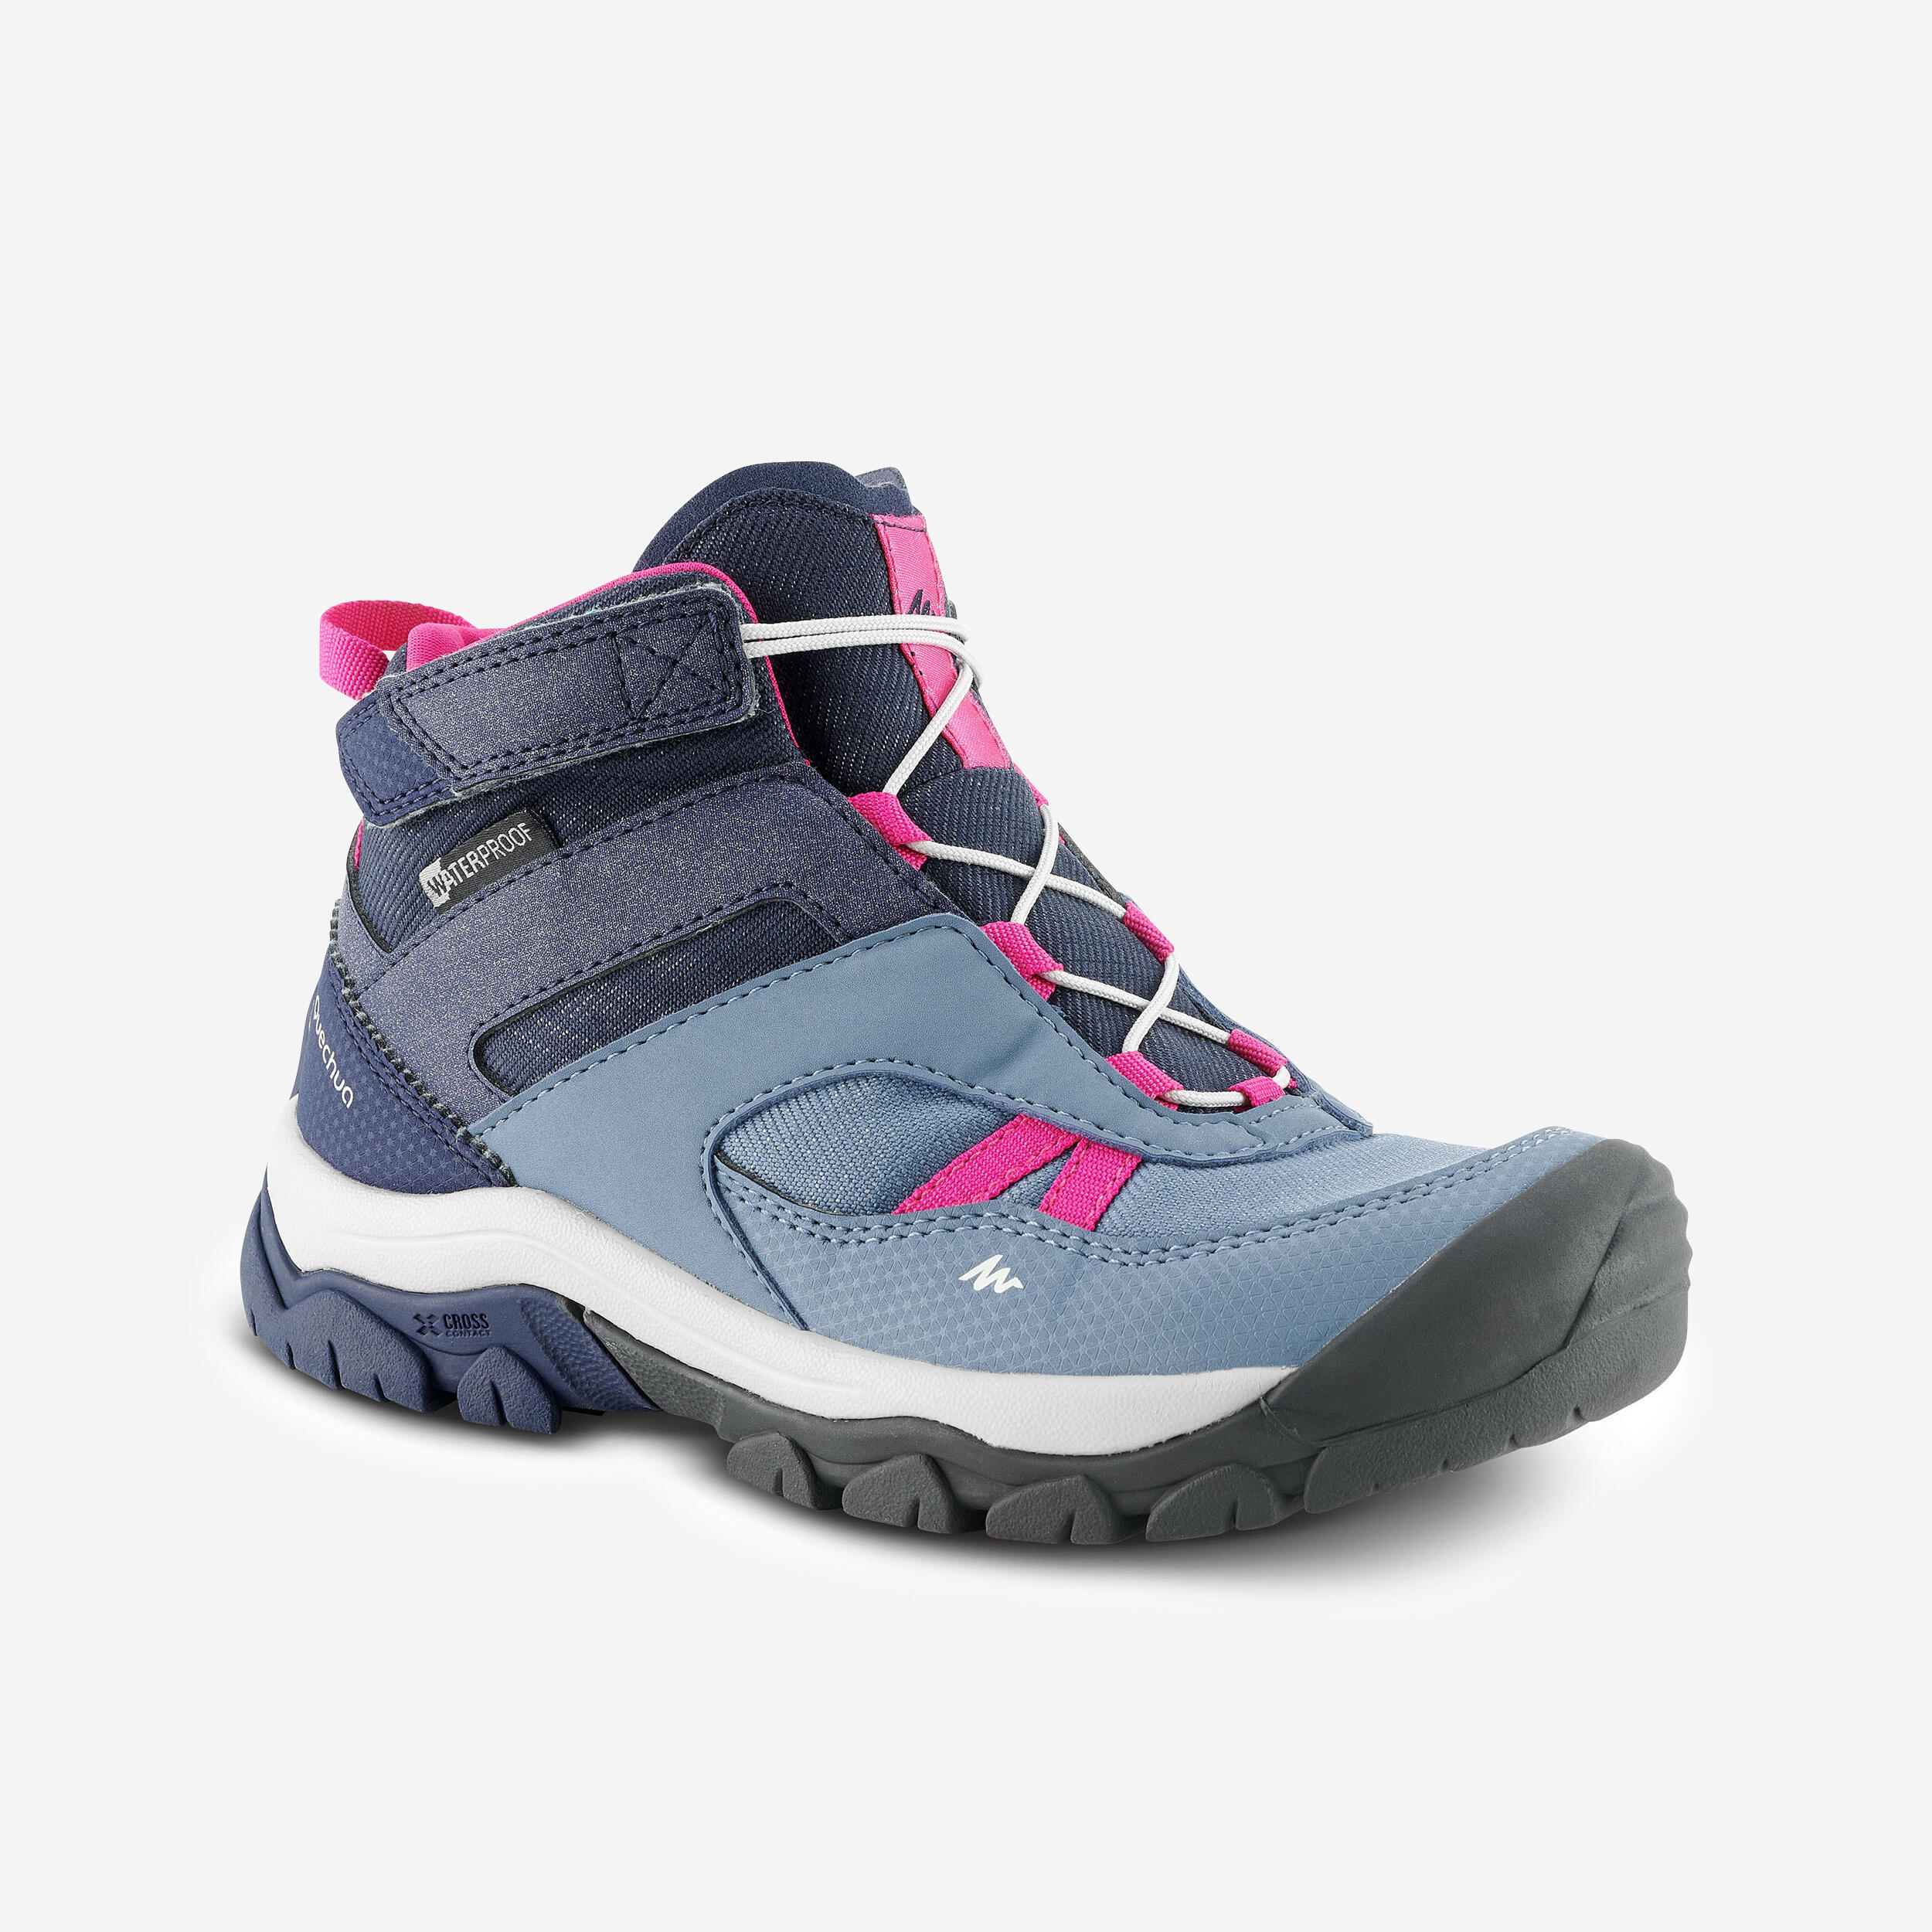 QUECHUA Children's waterproof walking shoes - CROSSROCK MID blue - size jr. 10 - ad. 2